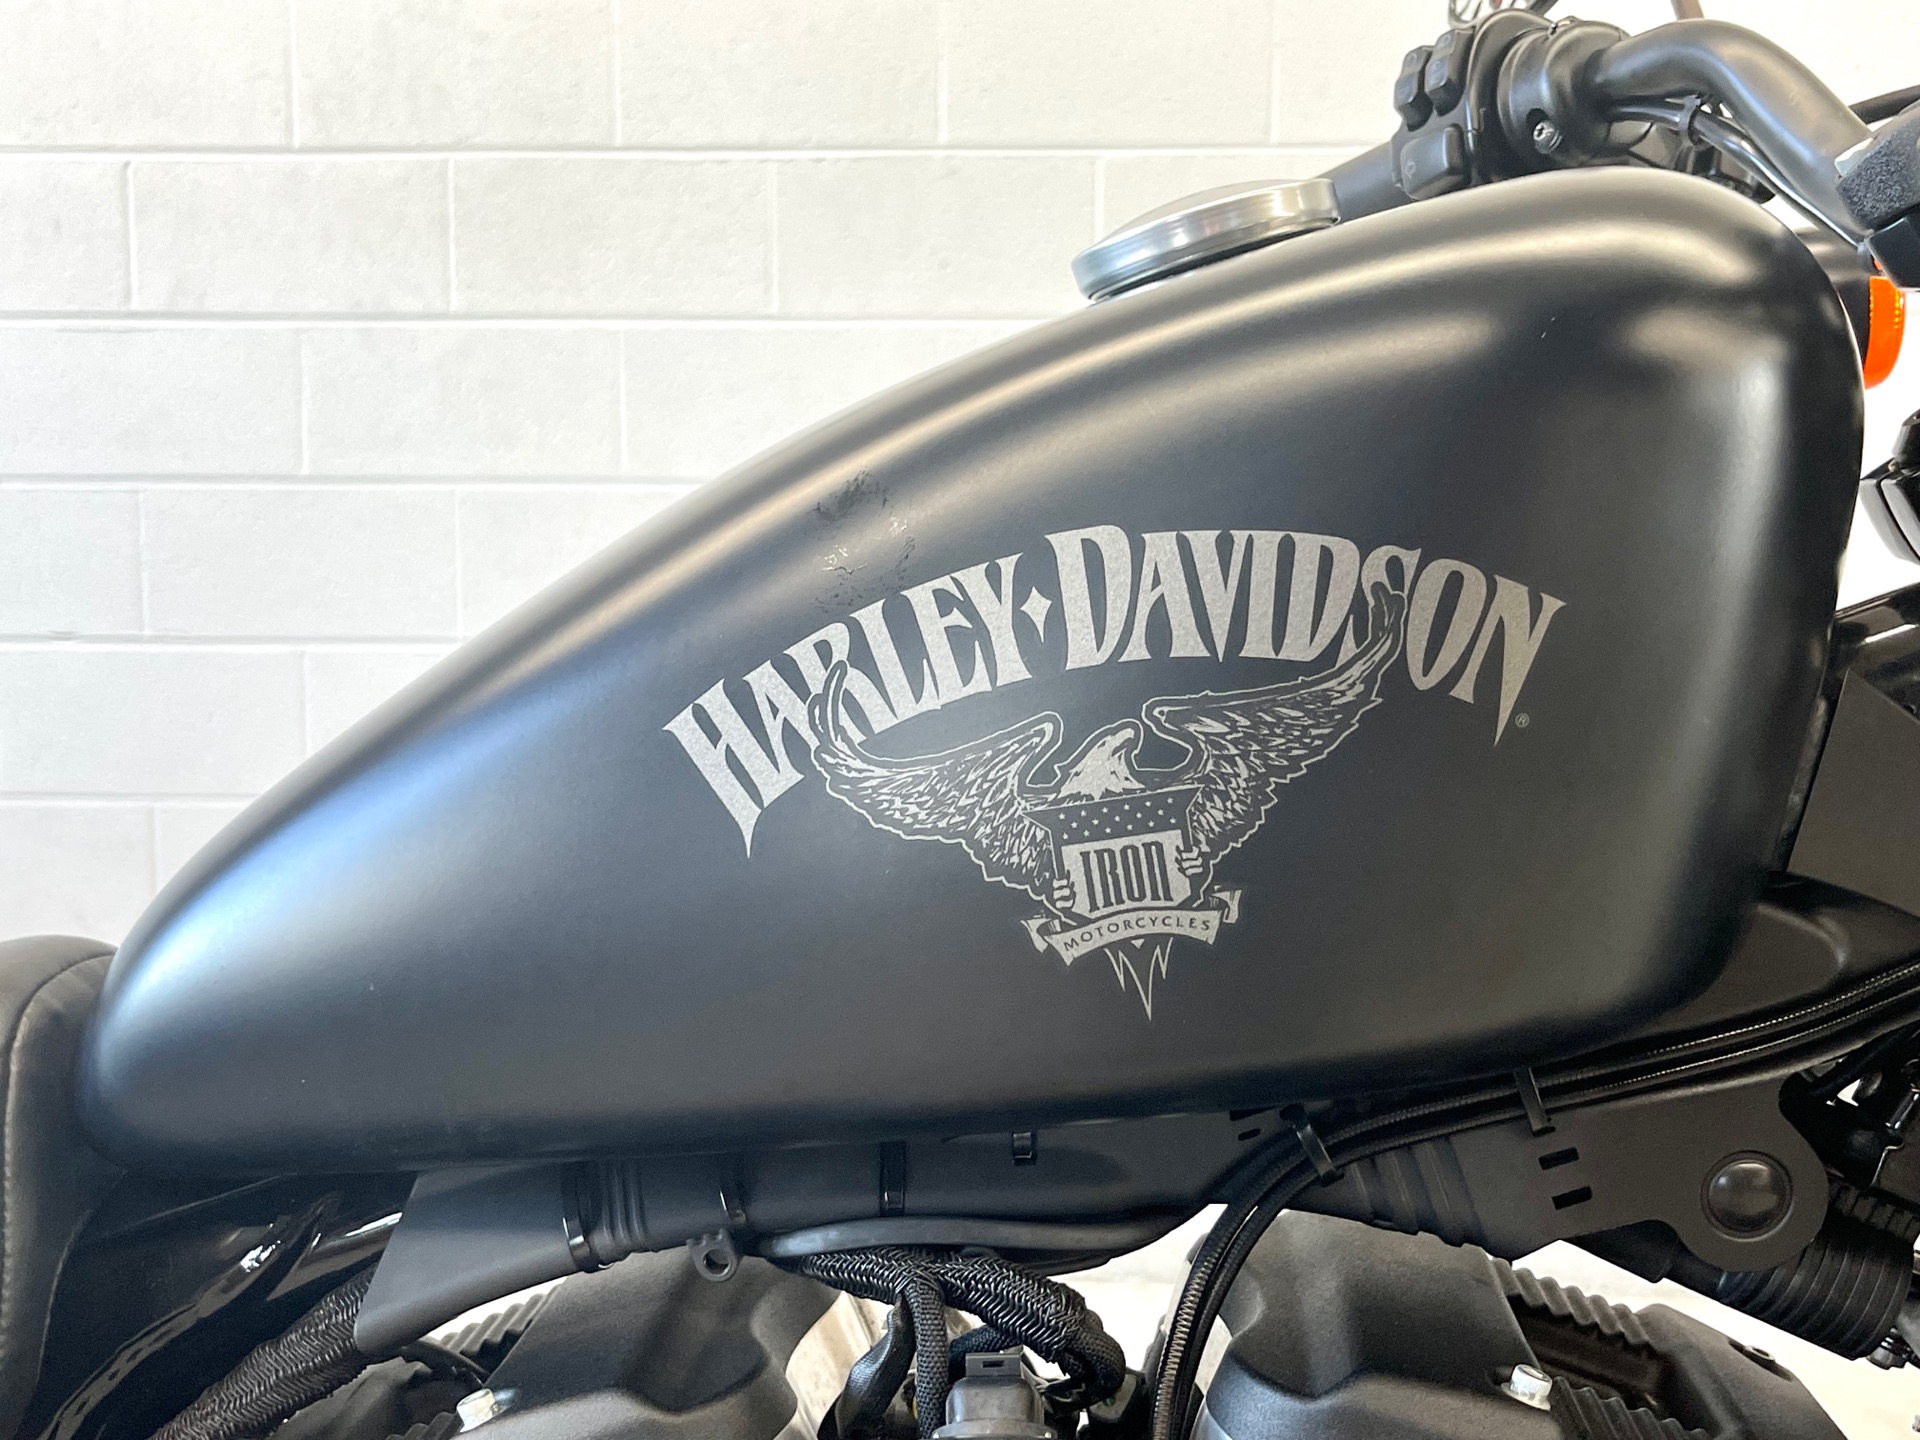 2018 Harley-Davidson Iron 883™ in Fredericksburg, Virginia - Photo 13